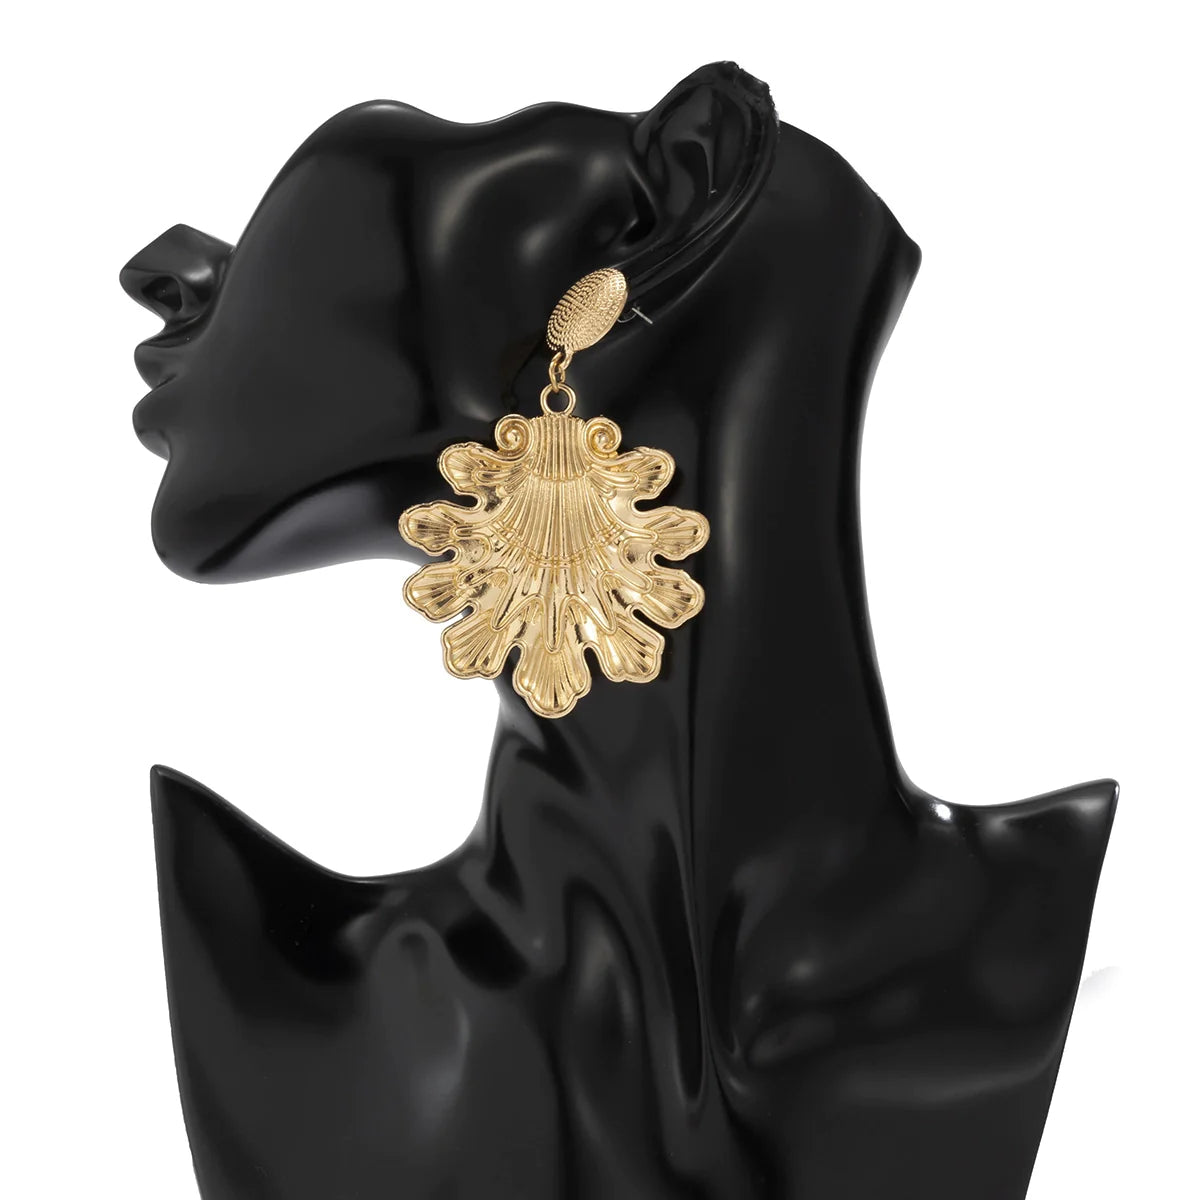 Fashion personality goldfish earrings